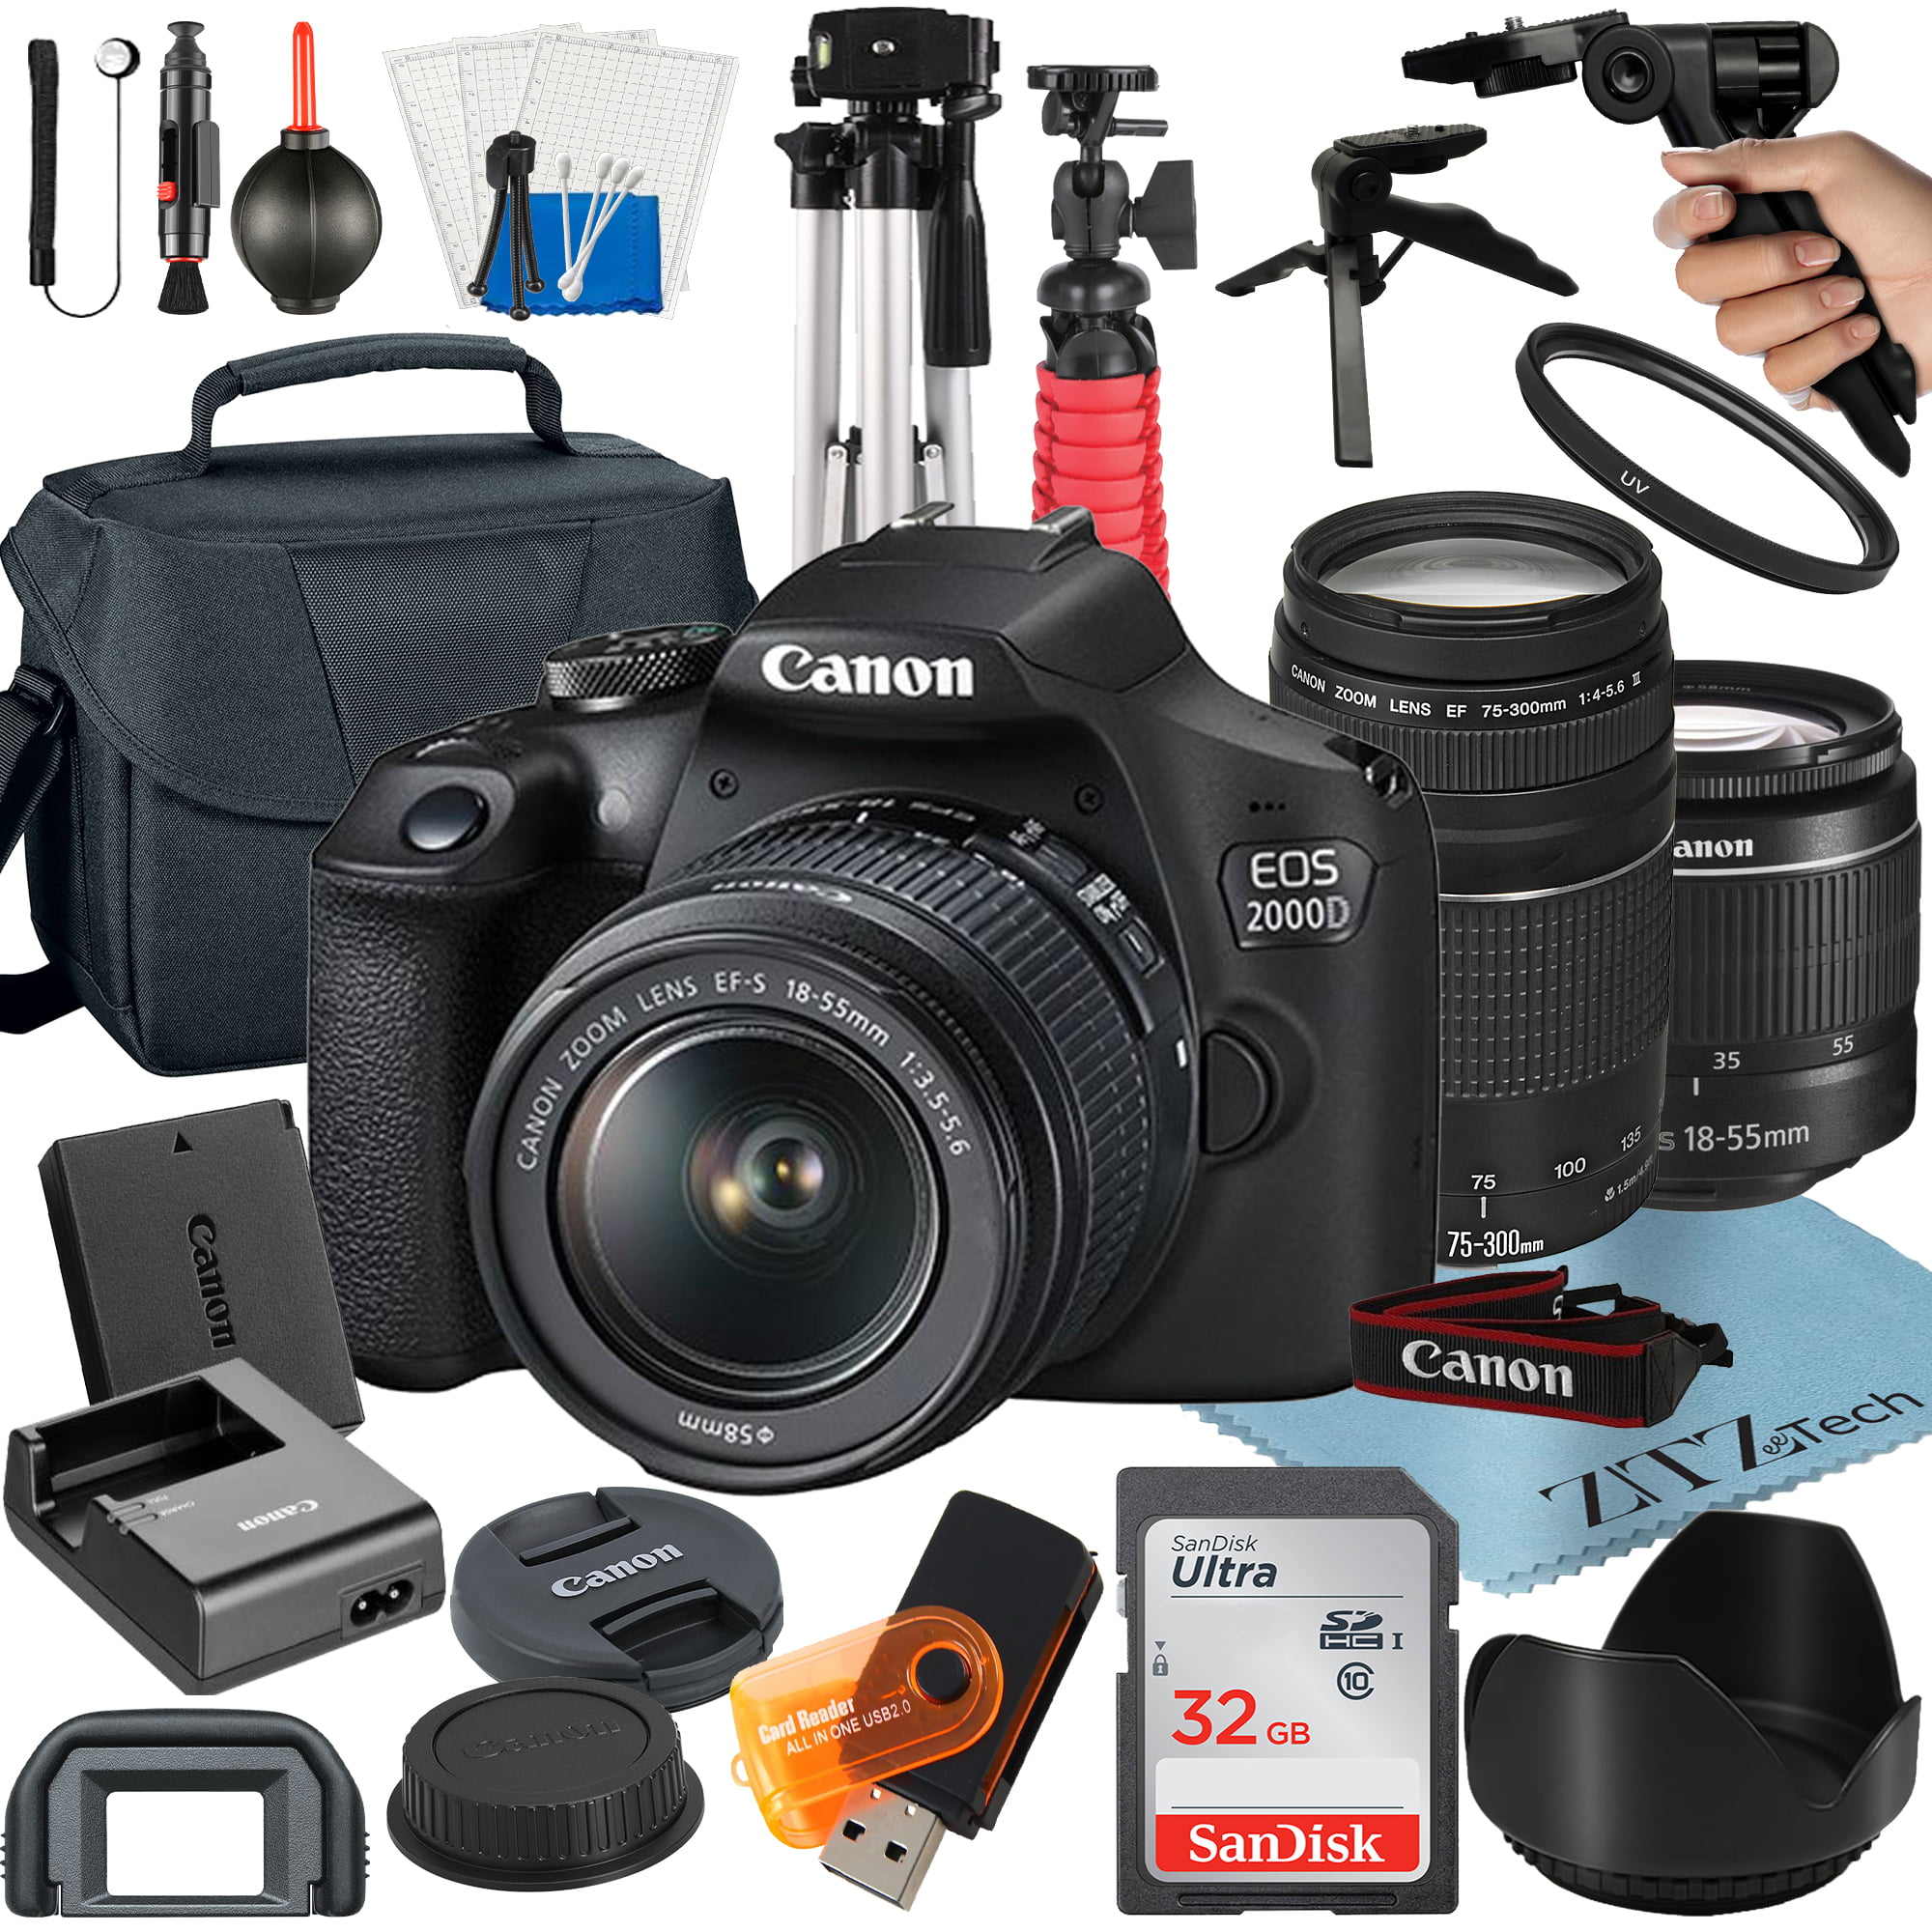 Canon EOS 2000D / Rebel T7 DSLR Camera Bundle with 18-55mm + 75-300mm Lens + 32GB SanDisk Card + Case + Tripod + ZeeTech Accessory